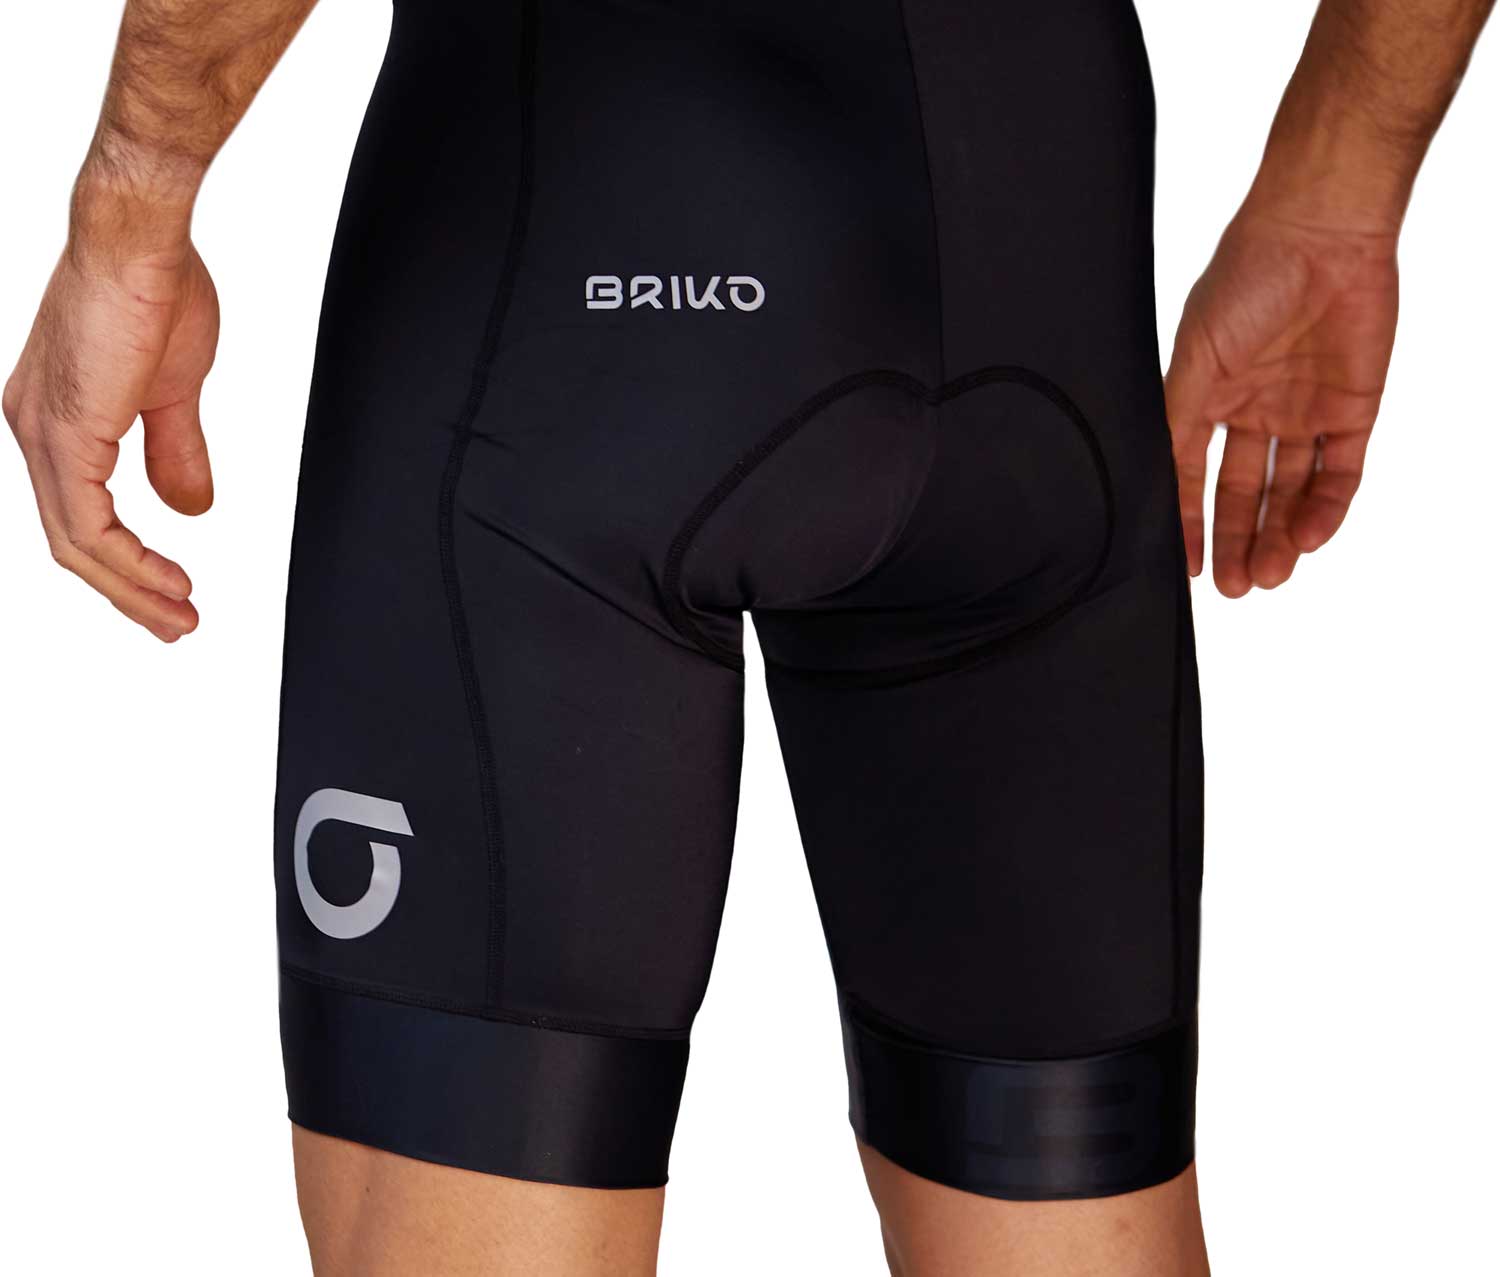 Men’s high waisted cycling shorts